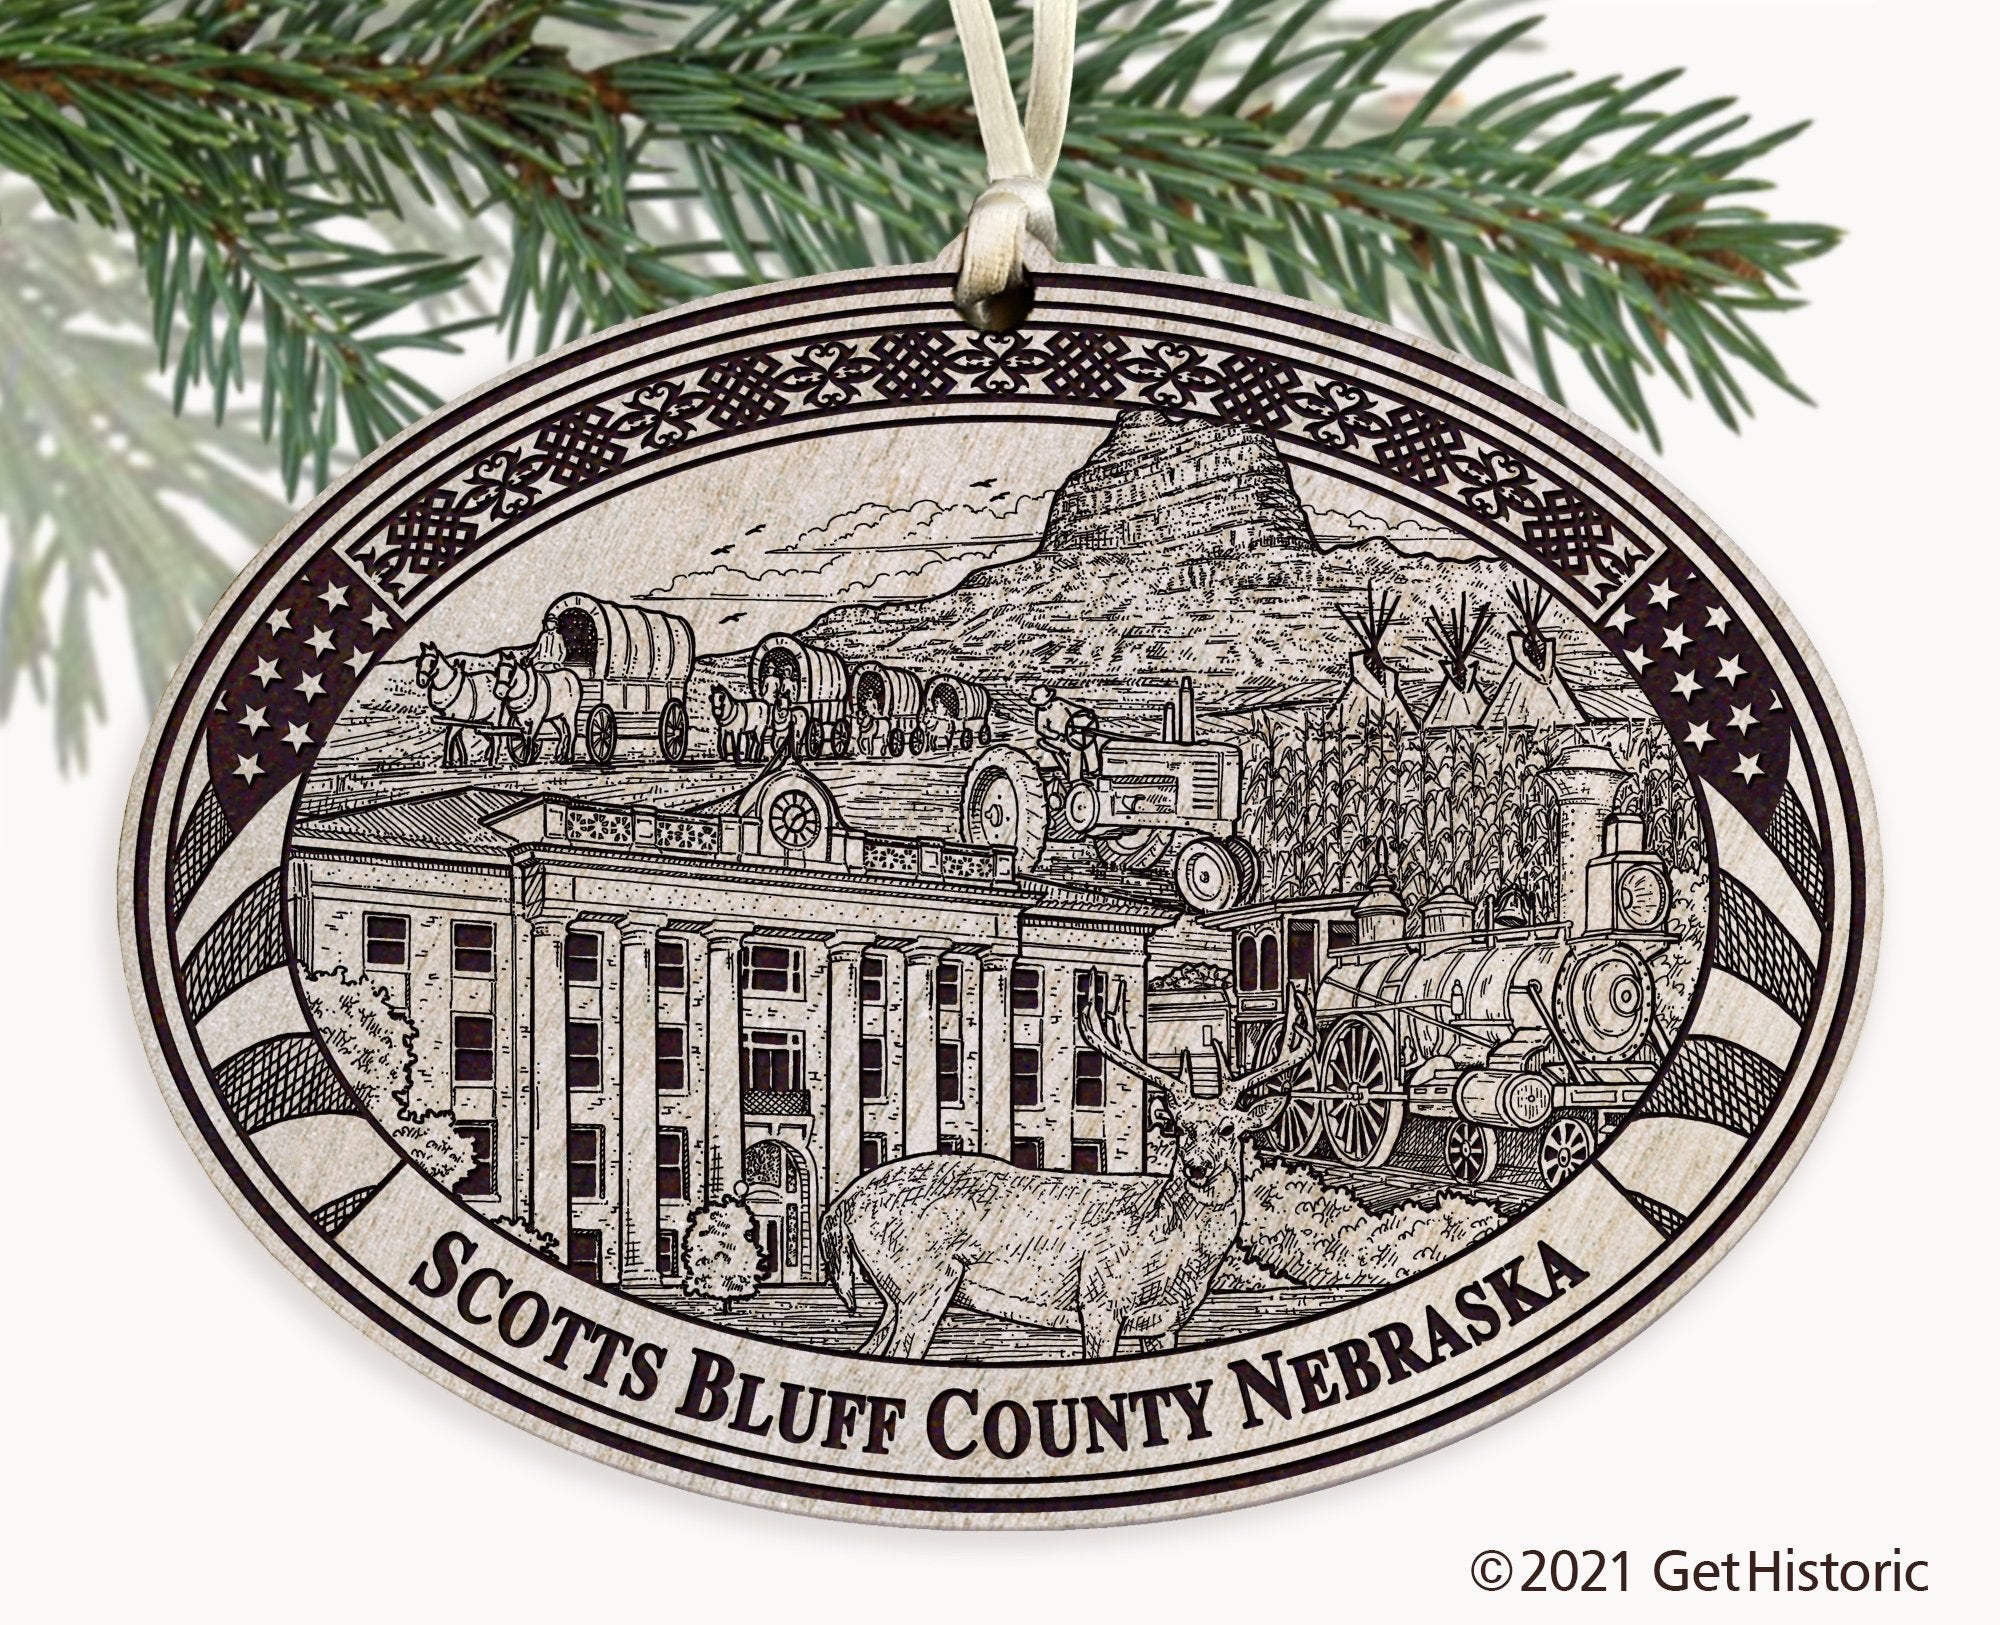 Scotts Bluff County Nebraska Engraved Ornament